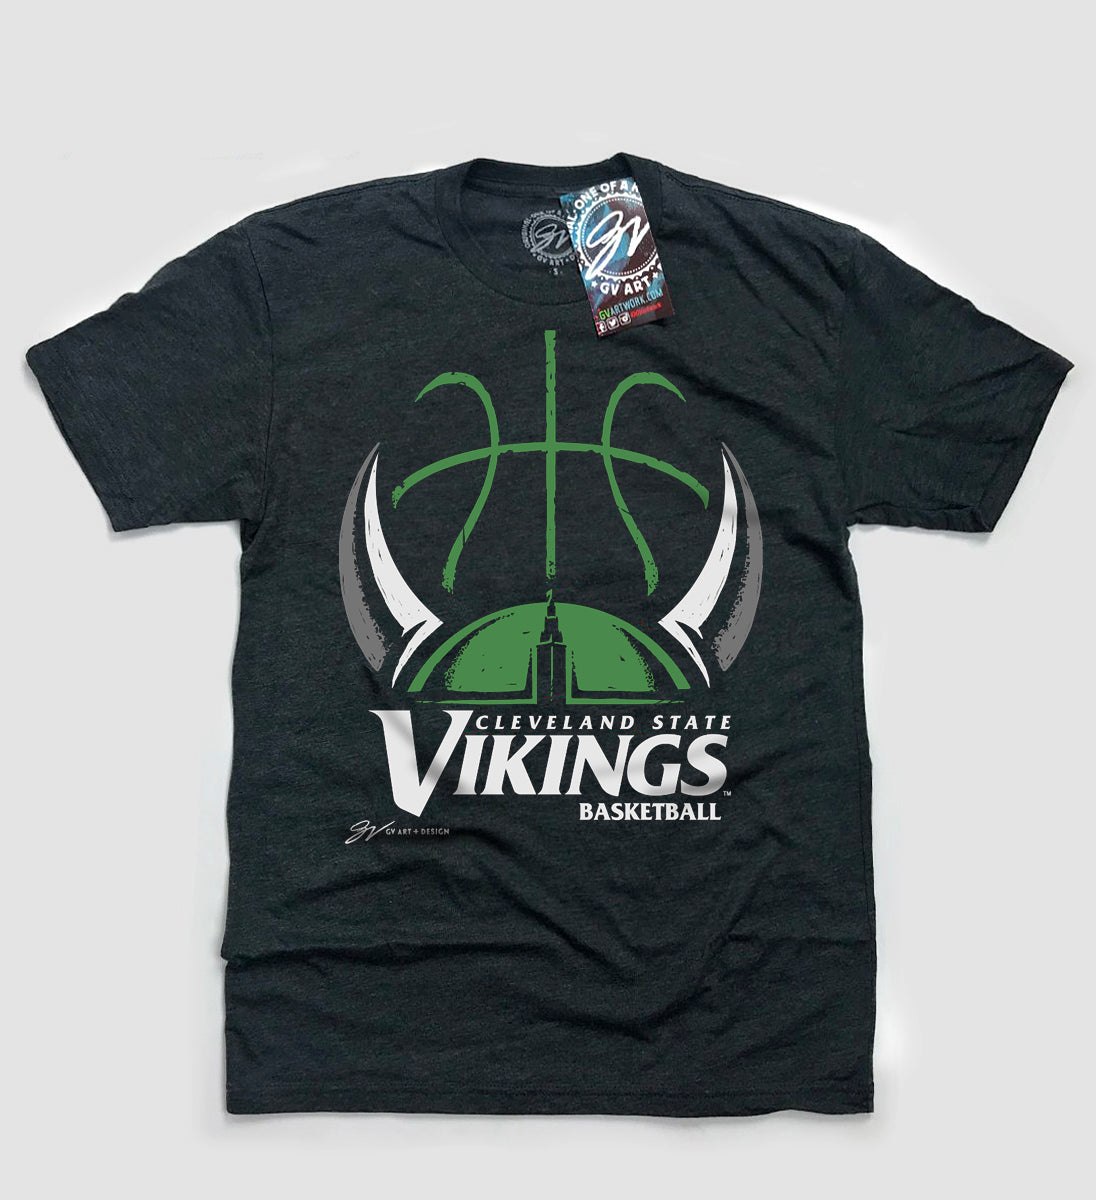 CSU Vikings Basketball T shirt